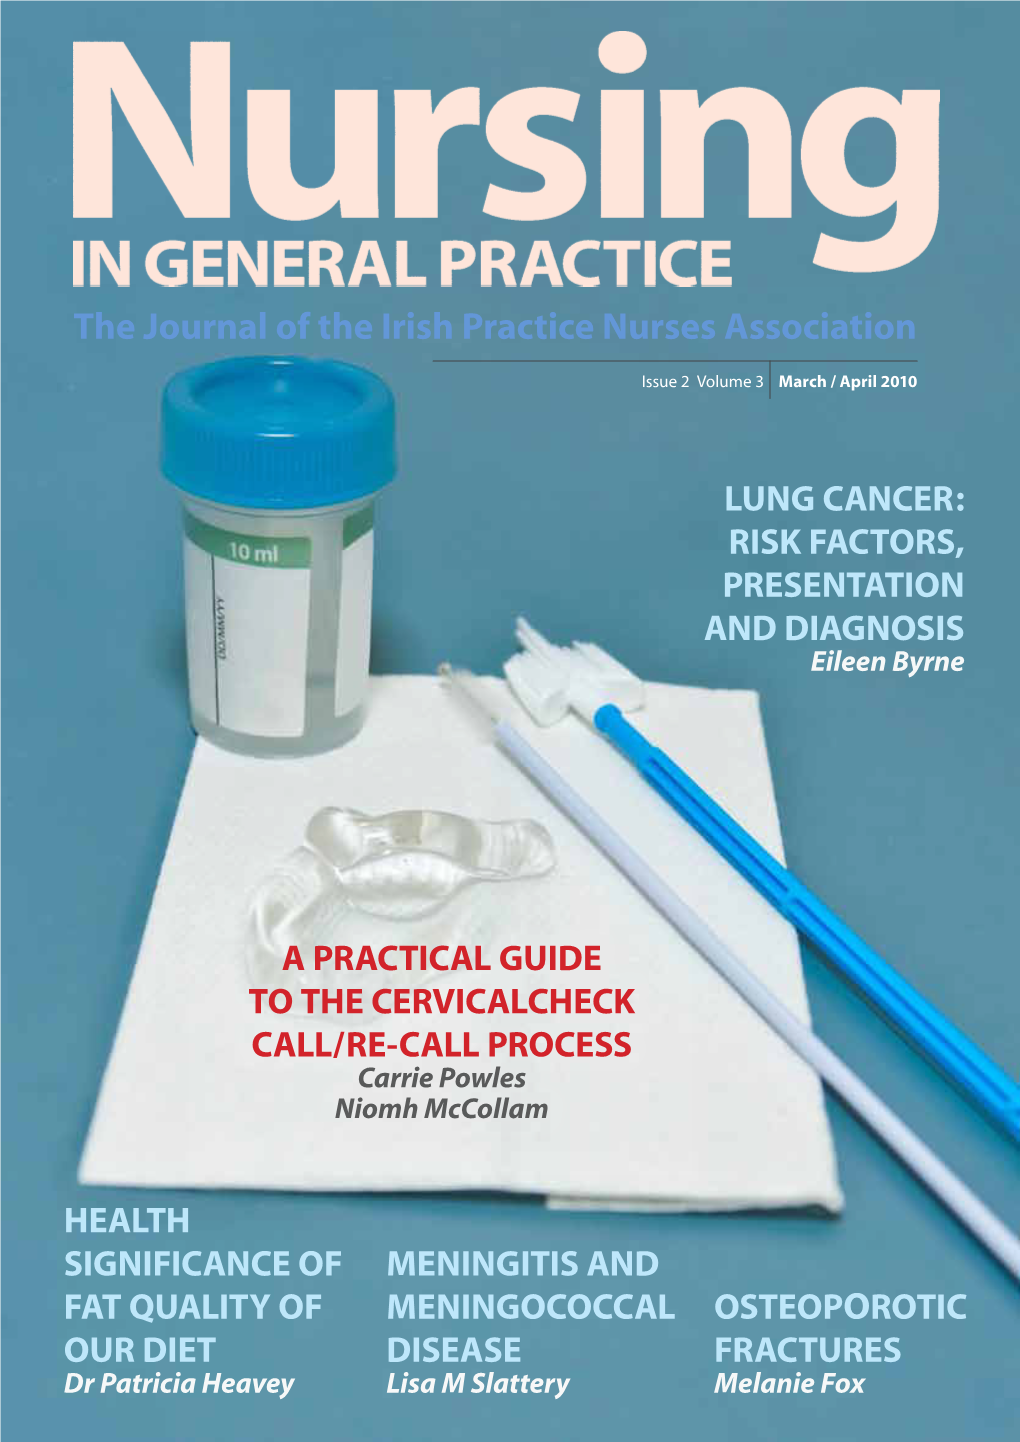 The Journal of the Irish Practice Nurses Association